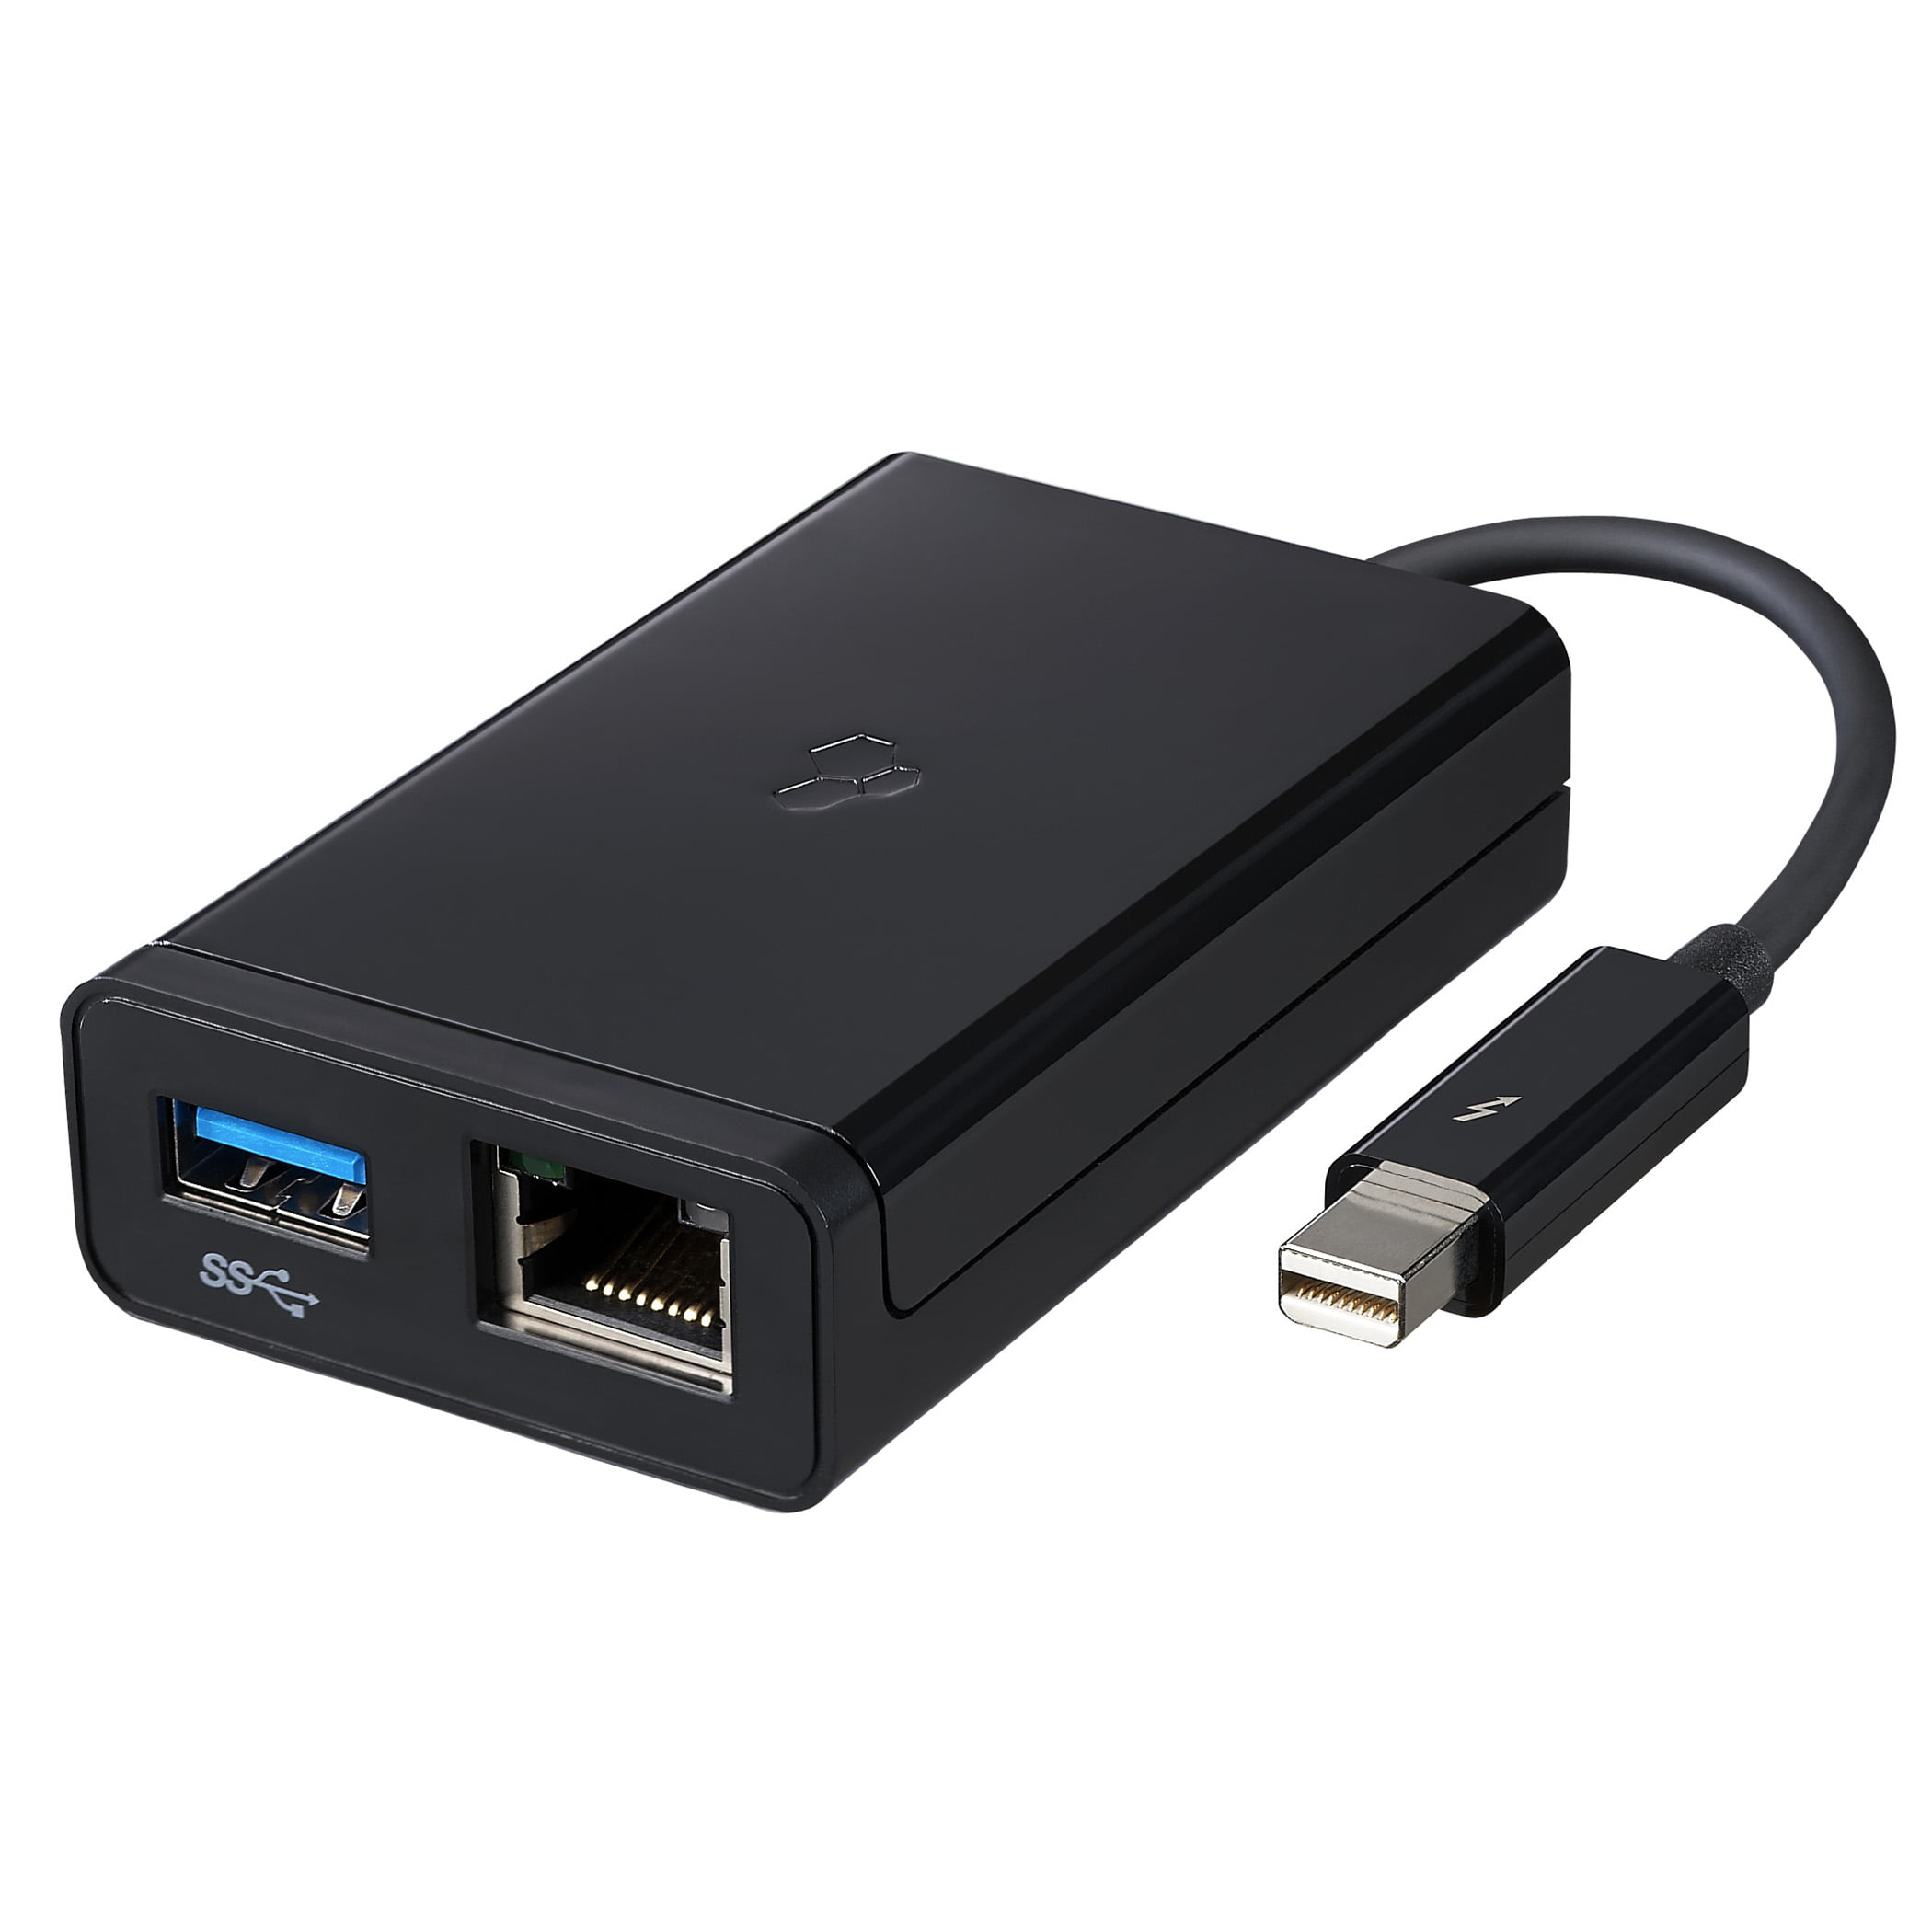 Review: Kanex Thunderbolt USB 3.0 und Gigabit Ethernet Adapter als Dock im Kurztest